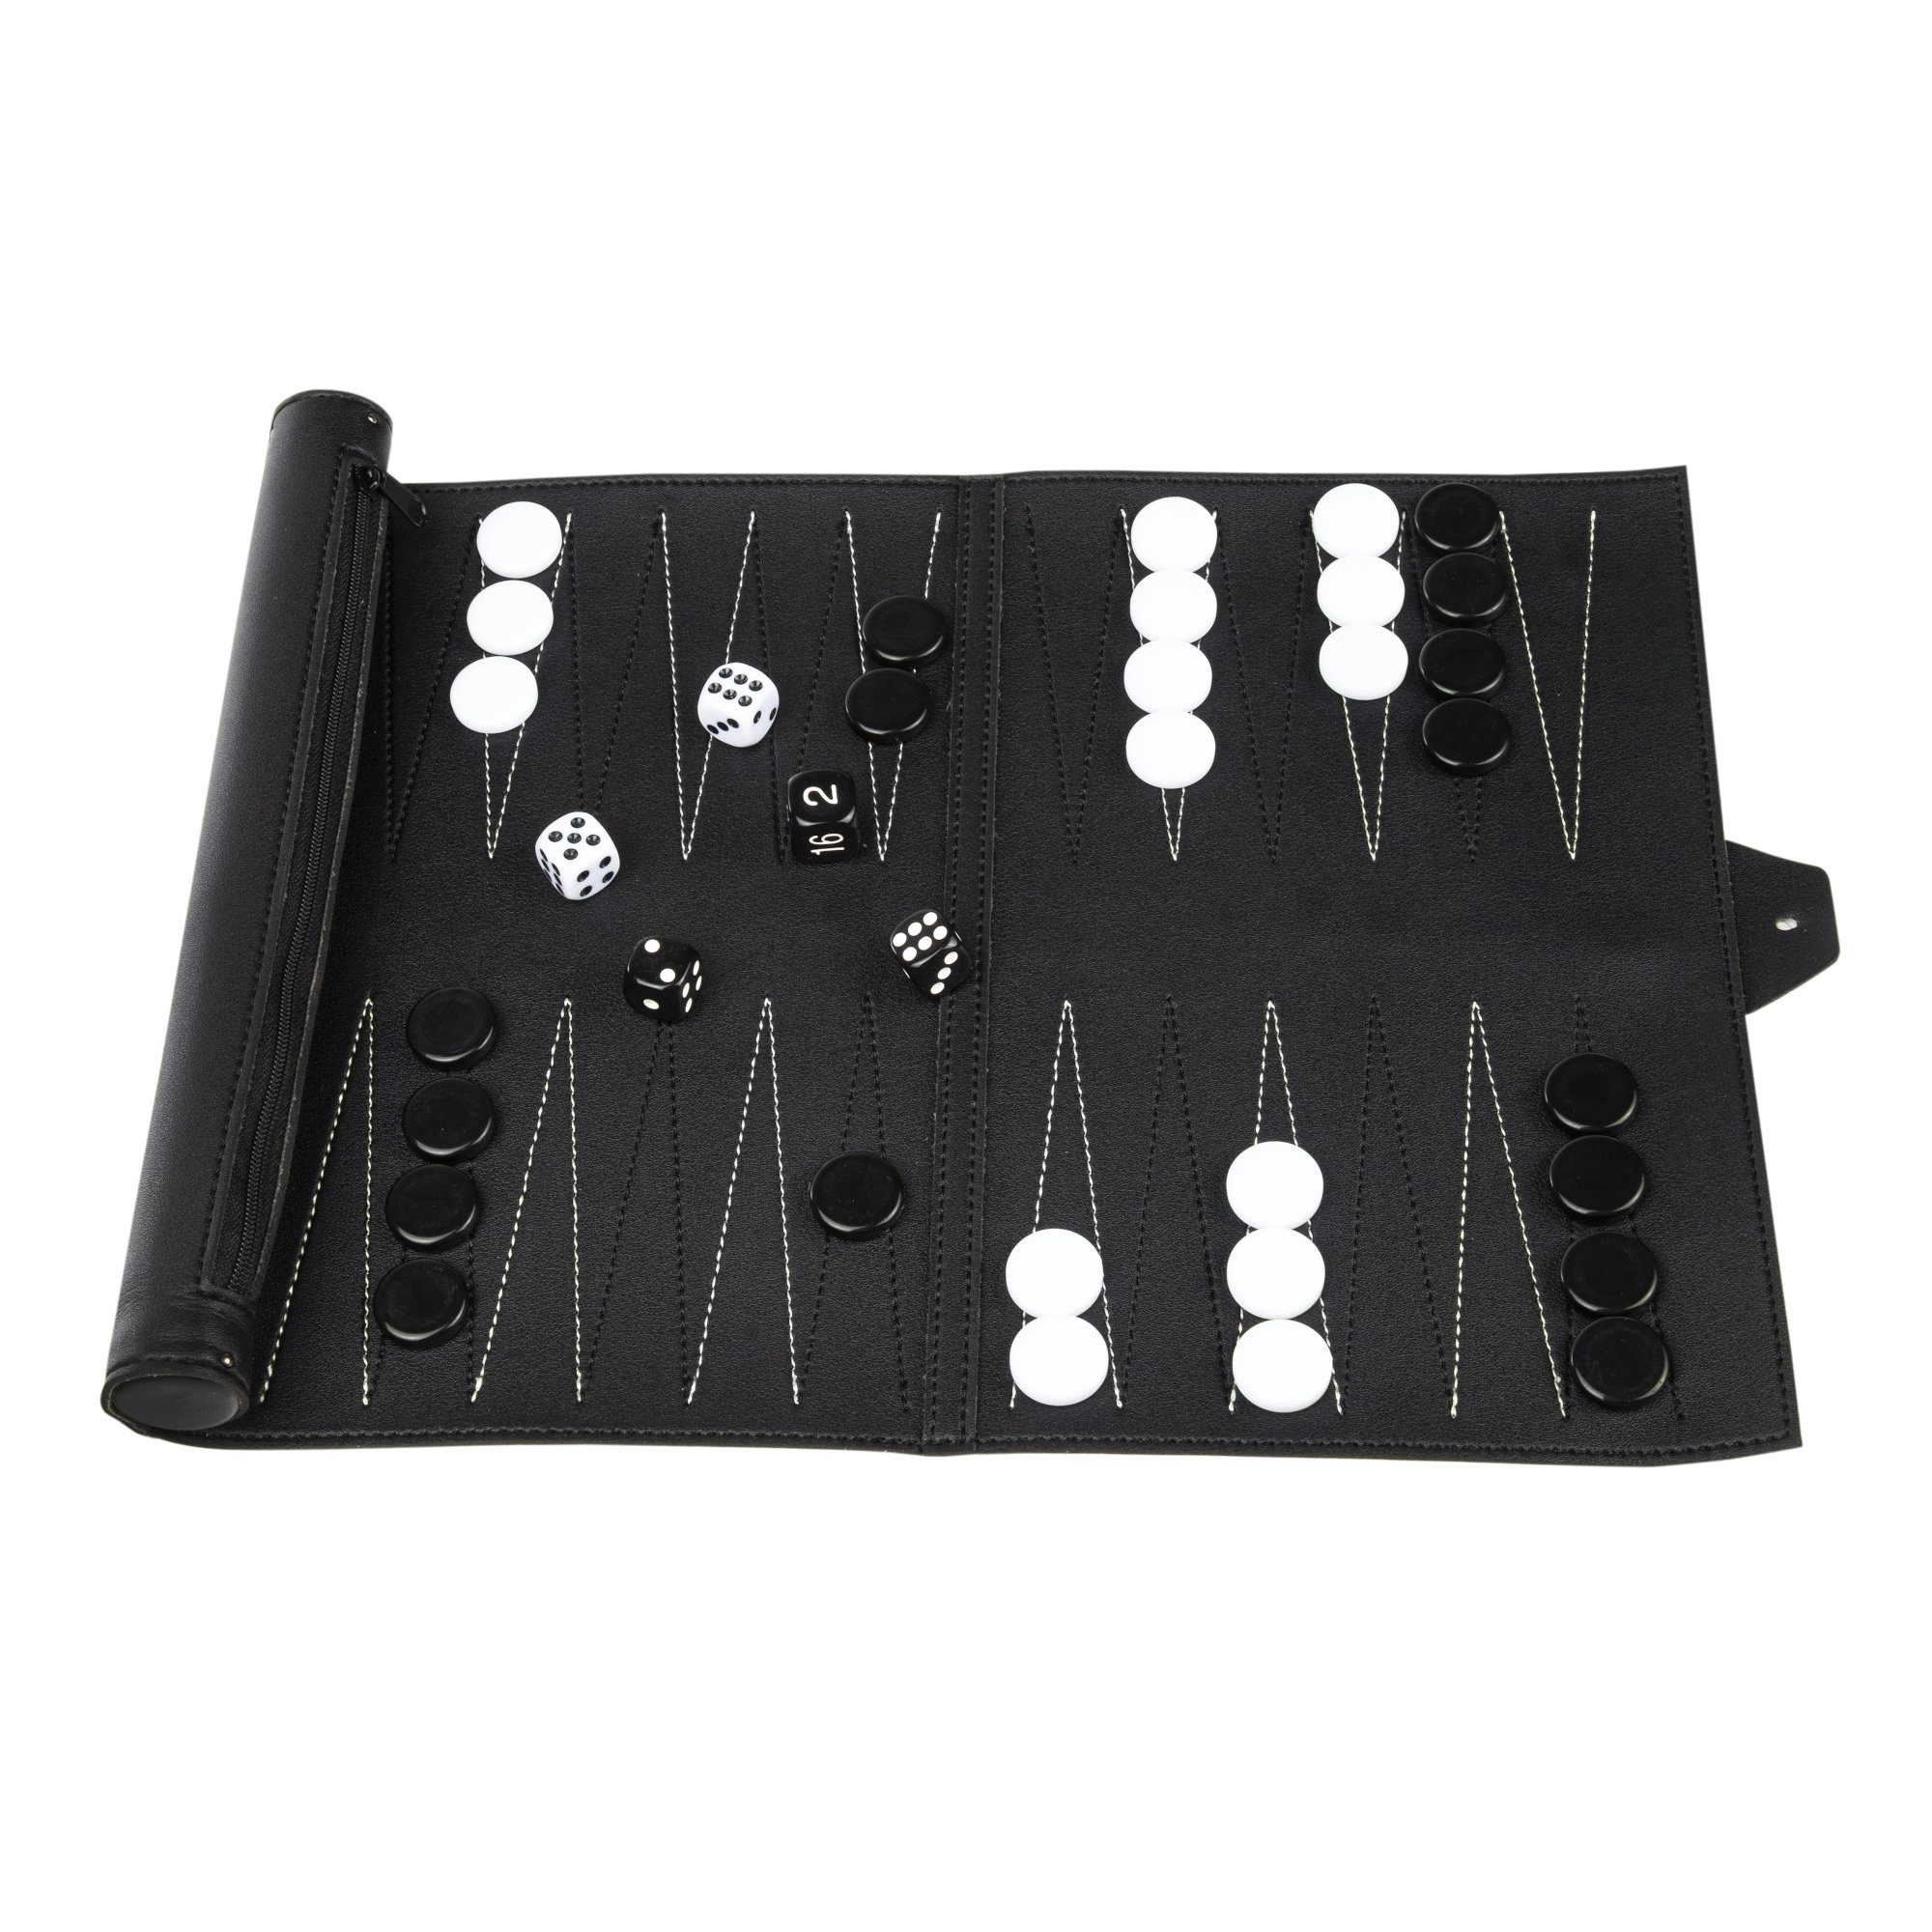 Gravidus Spiel, Backgammon Reise Kompakt Brettspiel Reise-Backgammon Reisespiel